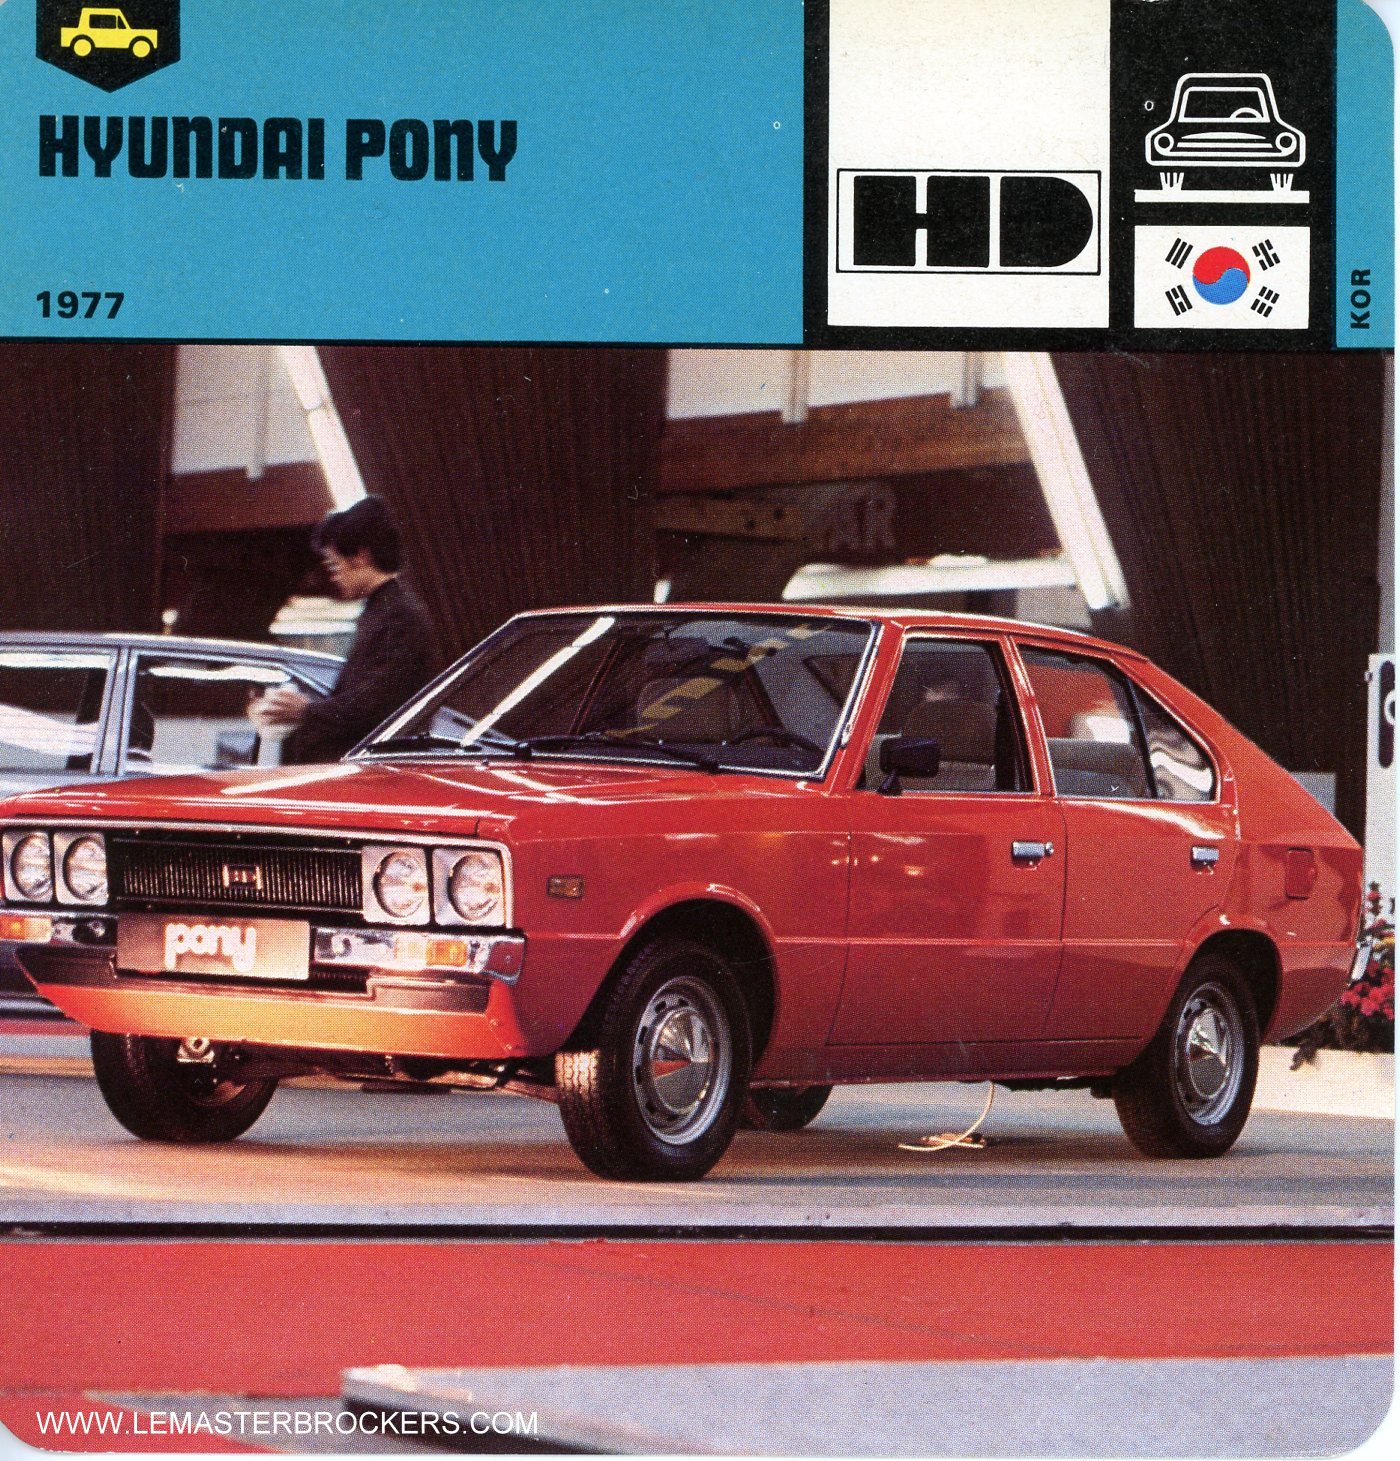 FICHE-AUTO-HYUNDAI-PONY-1977-LEMASTERBROCKERS